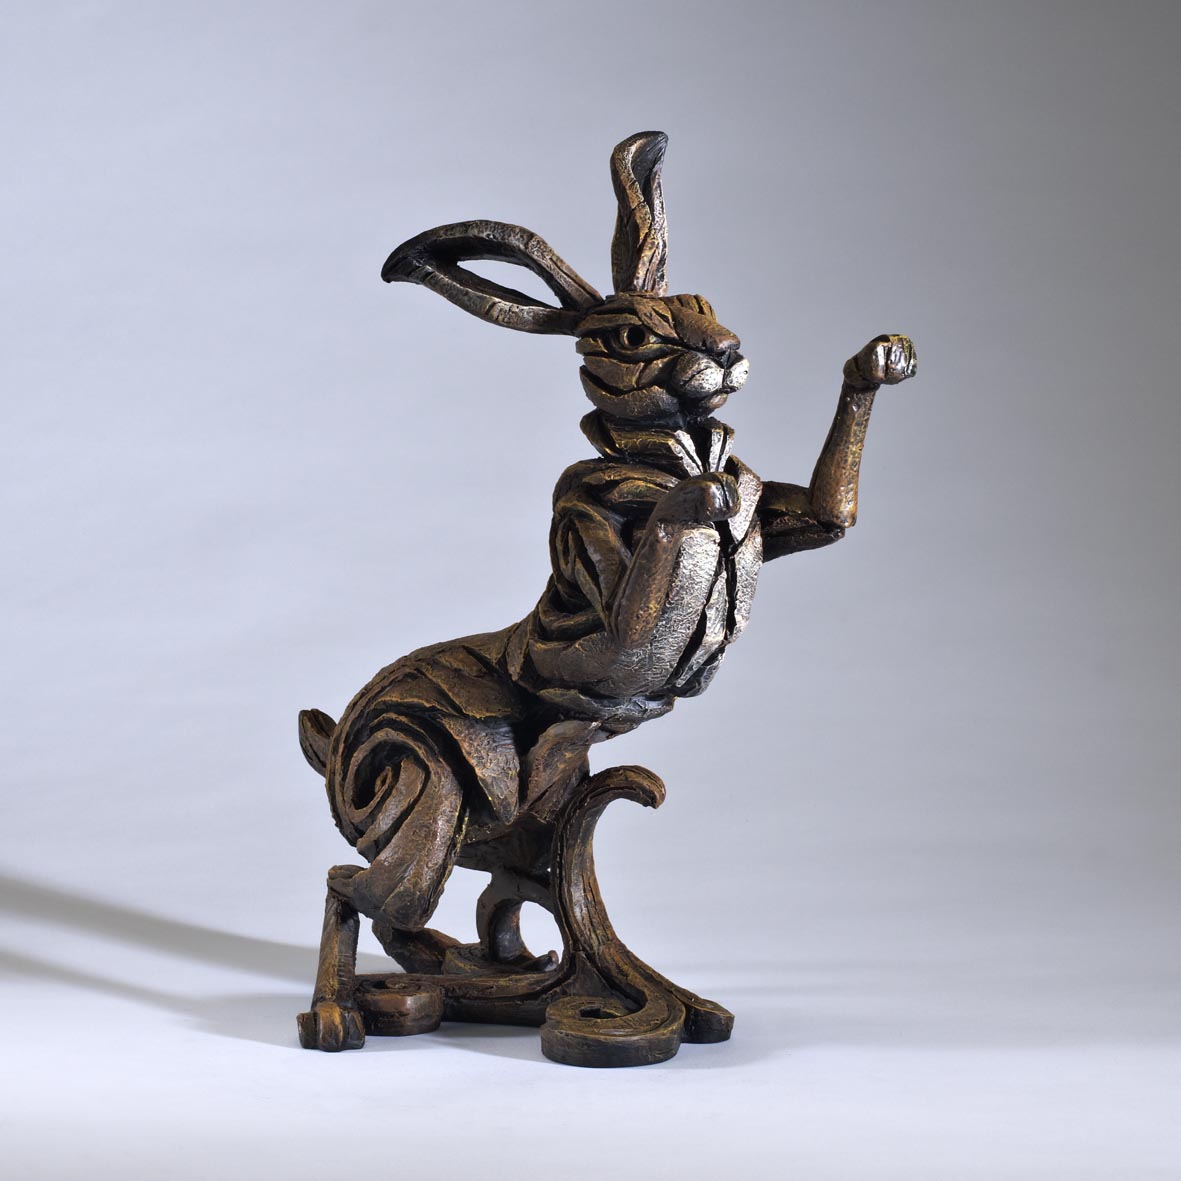 Edge Sculpture Hare - Brown by Matt Buckley